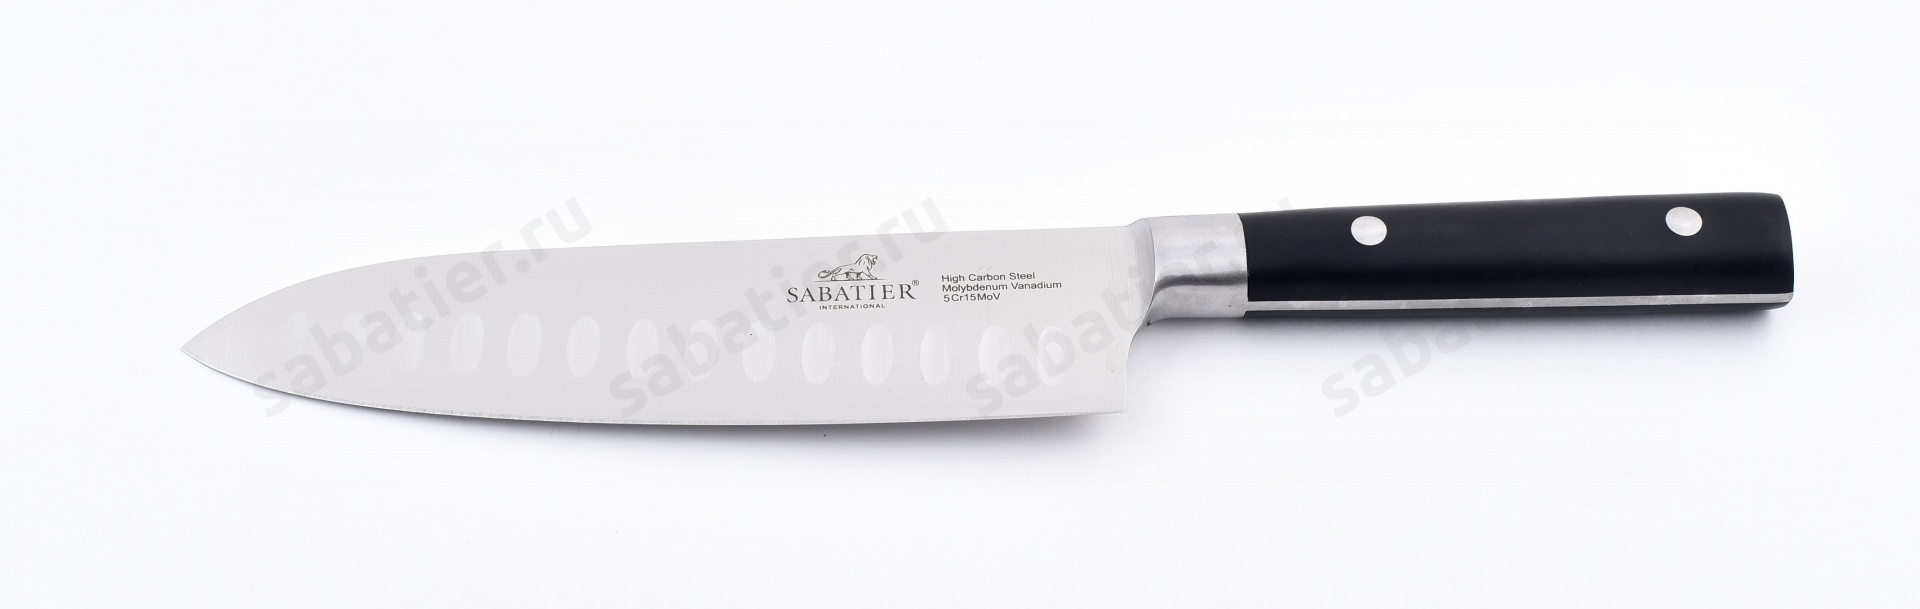 Нож Santoku LEONYS 18 см